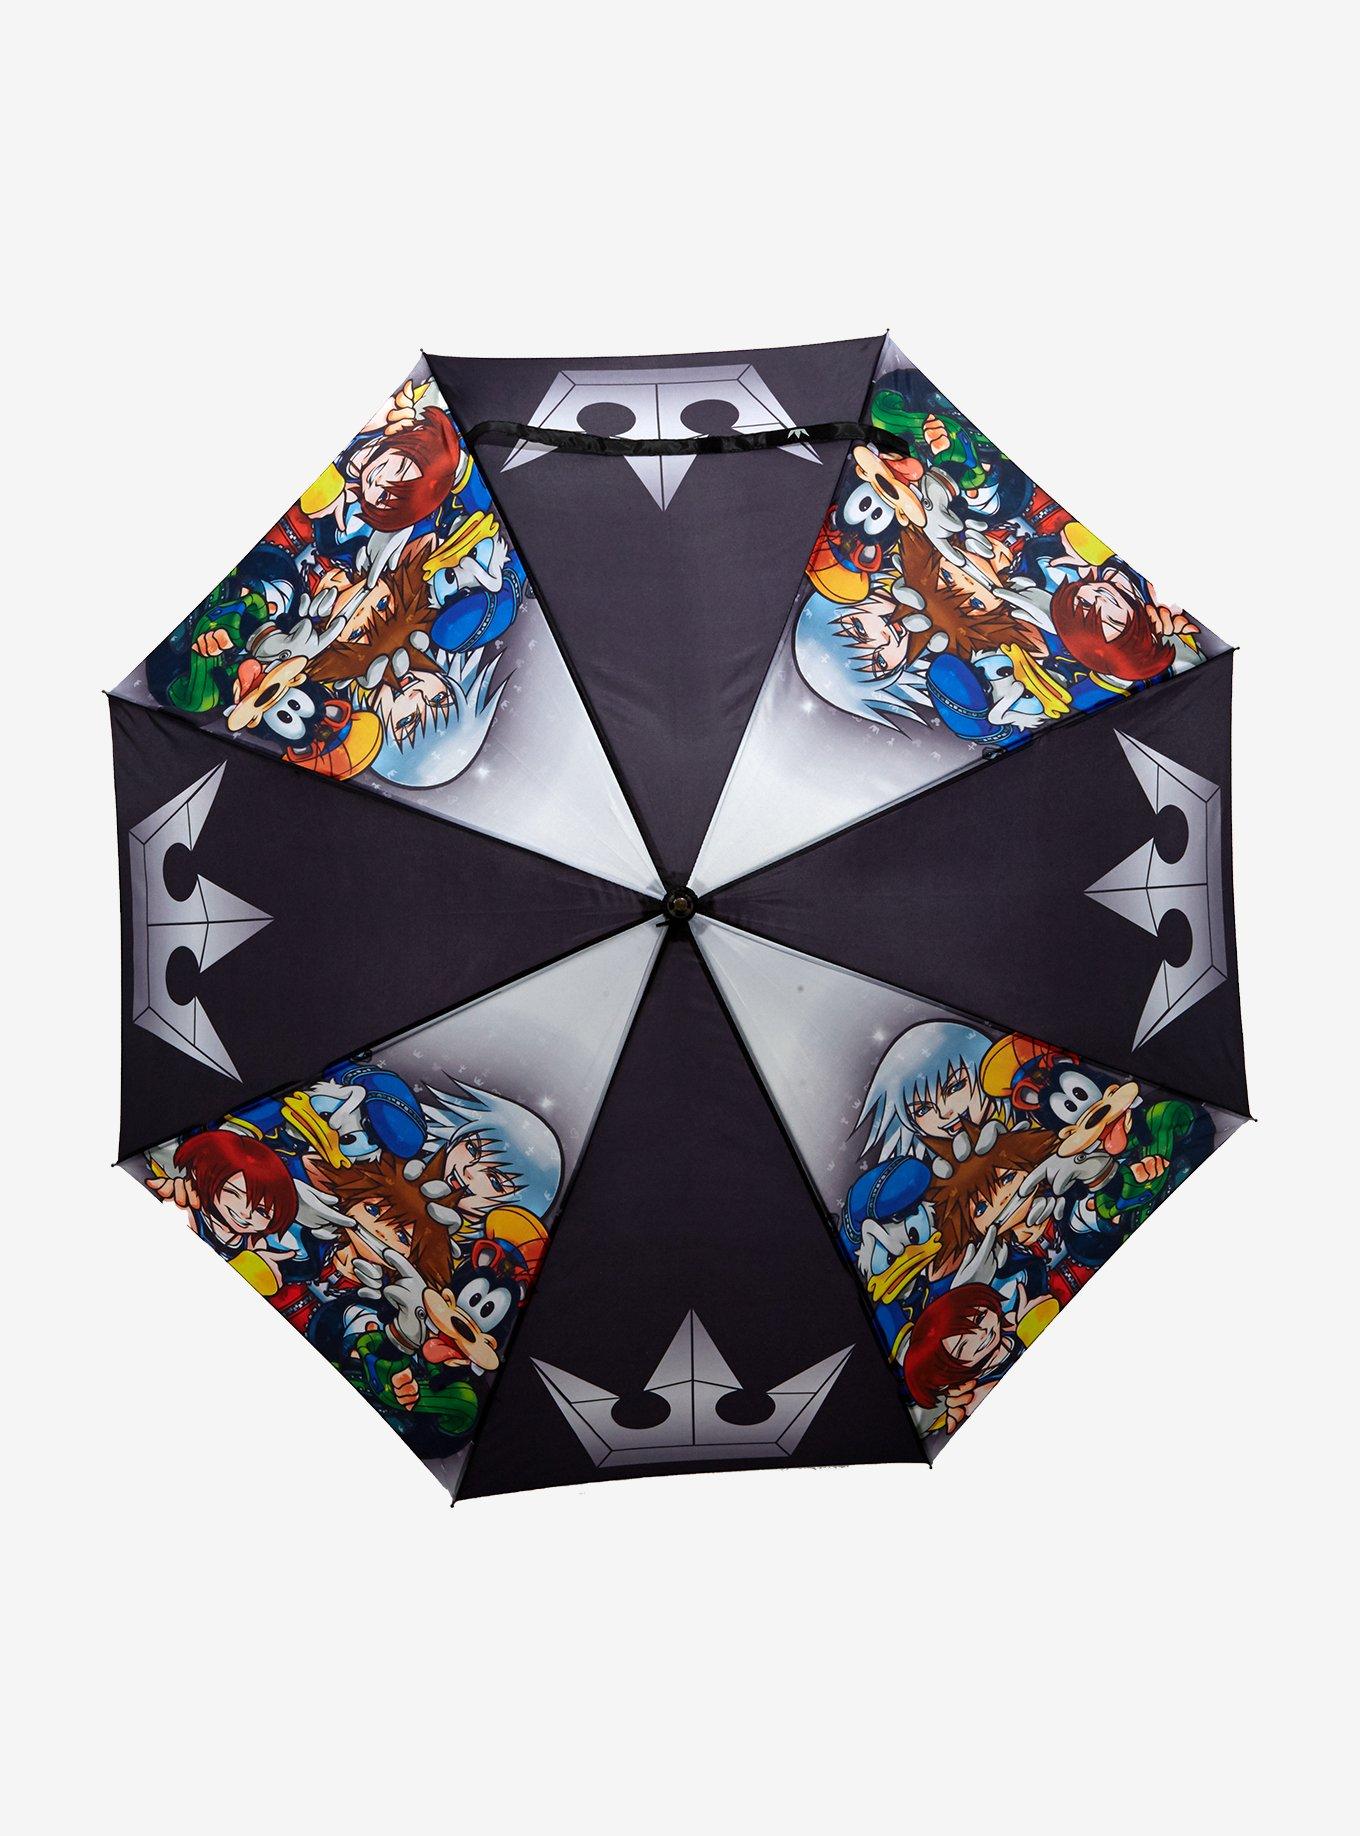 Disney Kingdom Hearts Keyblade Umbrella, , hi-res